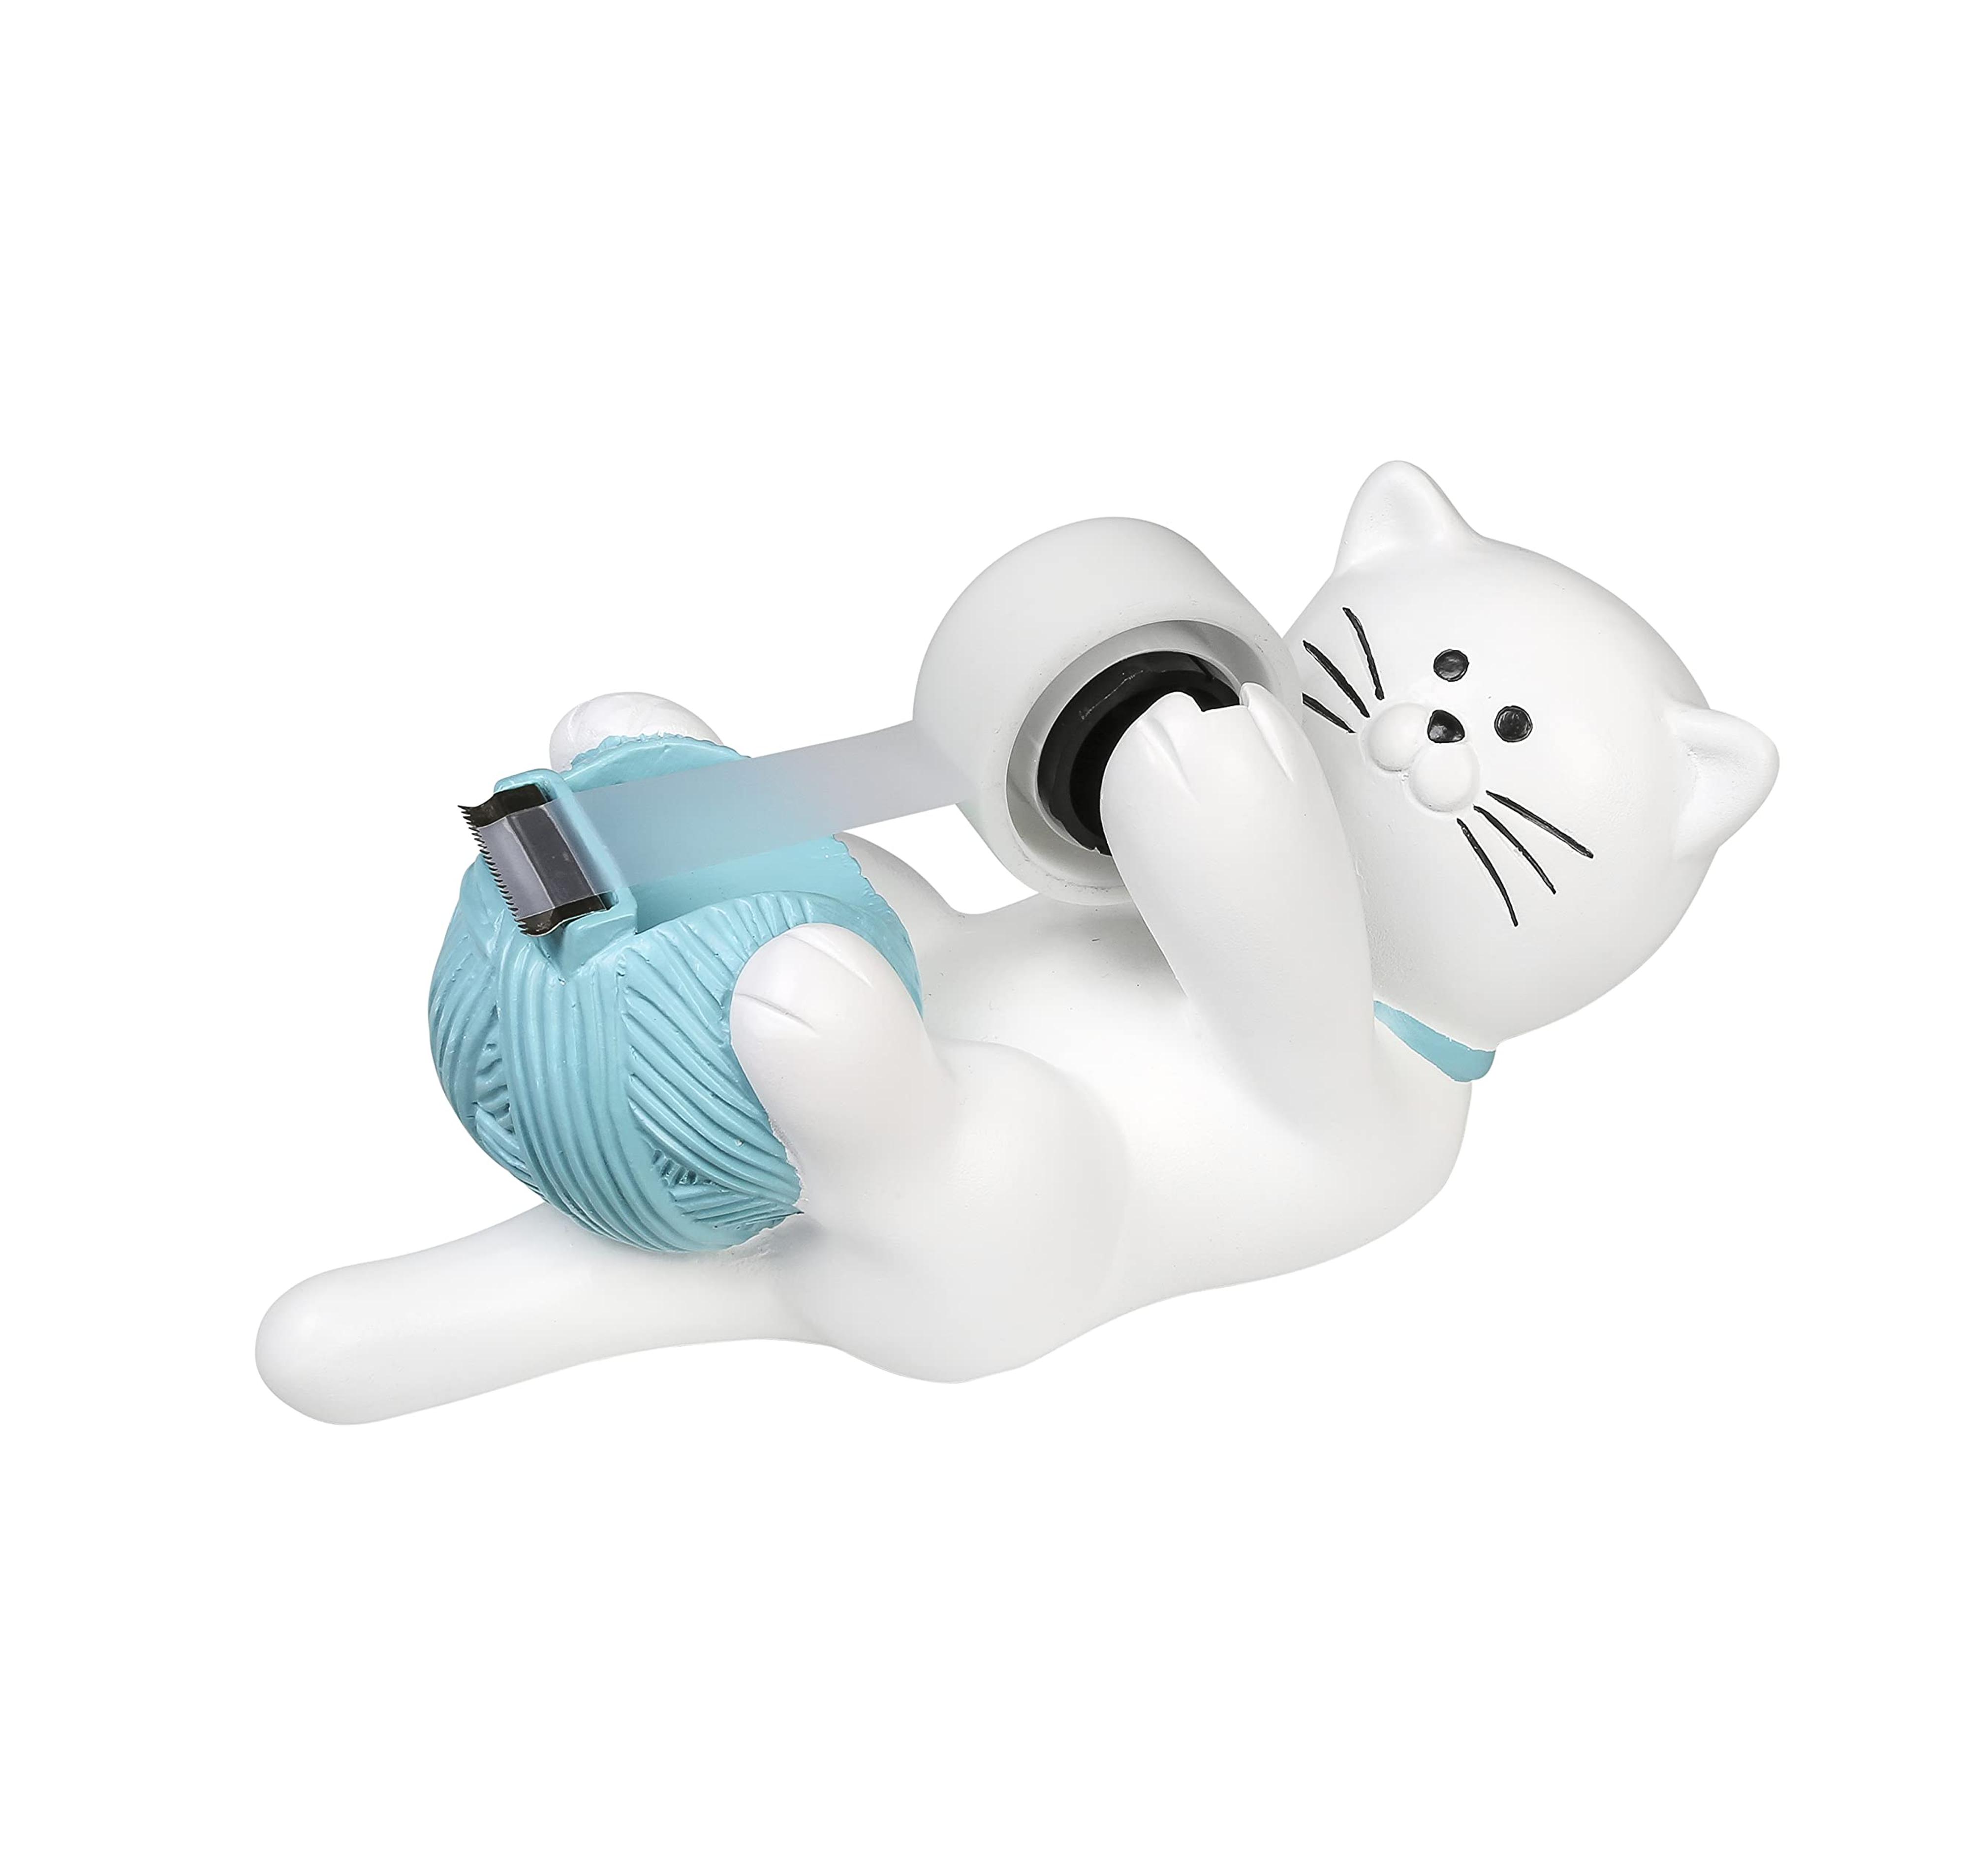 Chapman & Grand Kitty Cat Tape Dispenser (White/Turquoise), Patent Pending